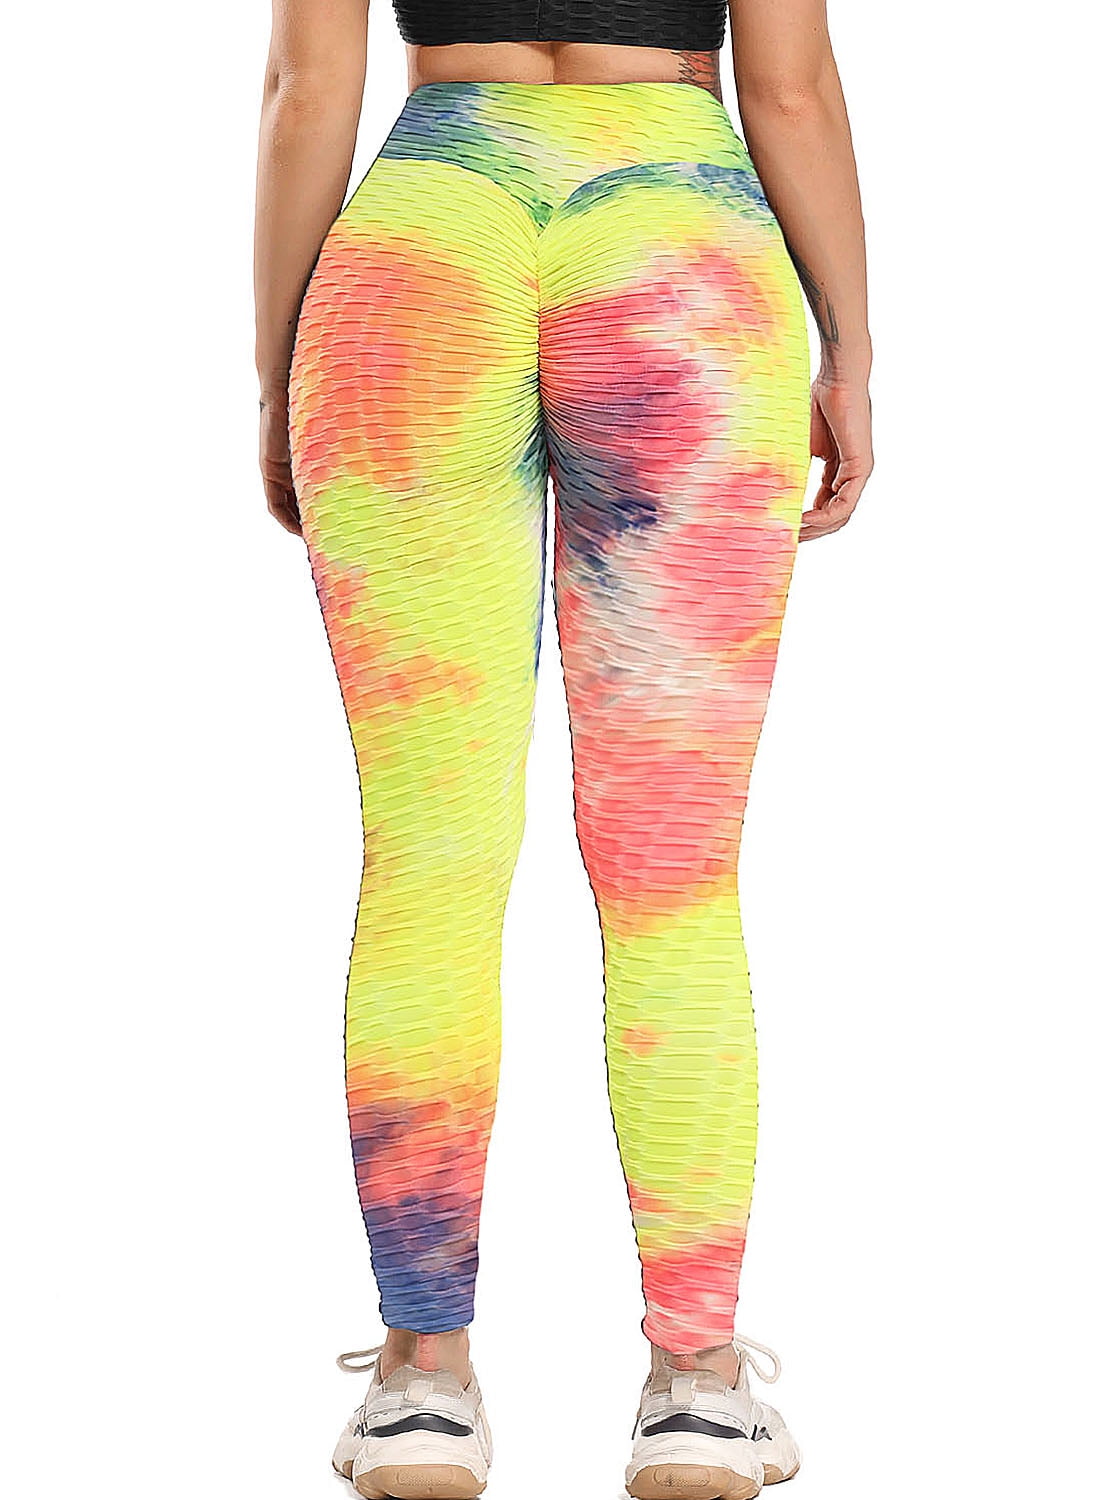 Leggings for Women Buff Lift Tummy Control Tie Dye Printing High Waist Exercise Fitness Running Athletic Yoga Pants 